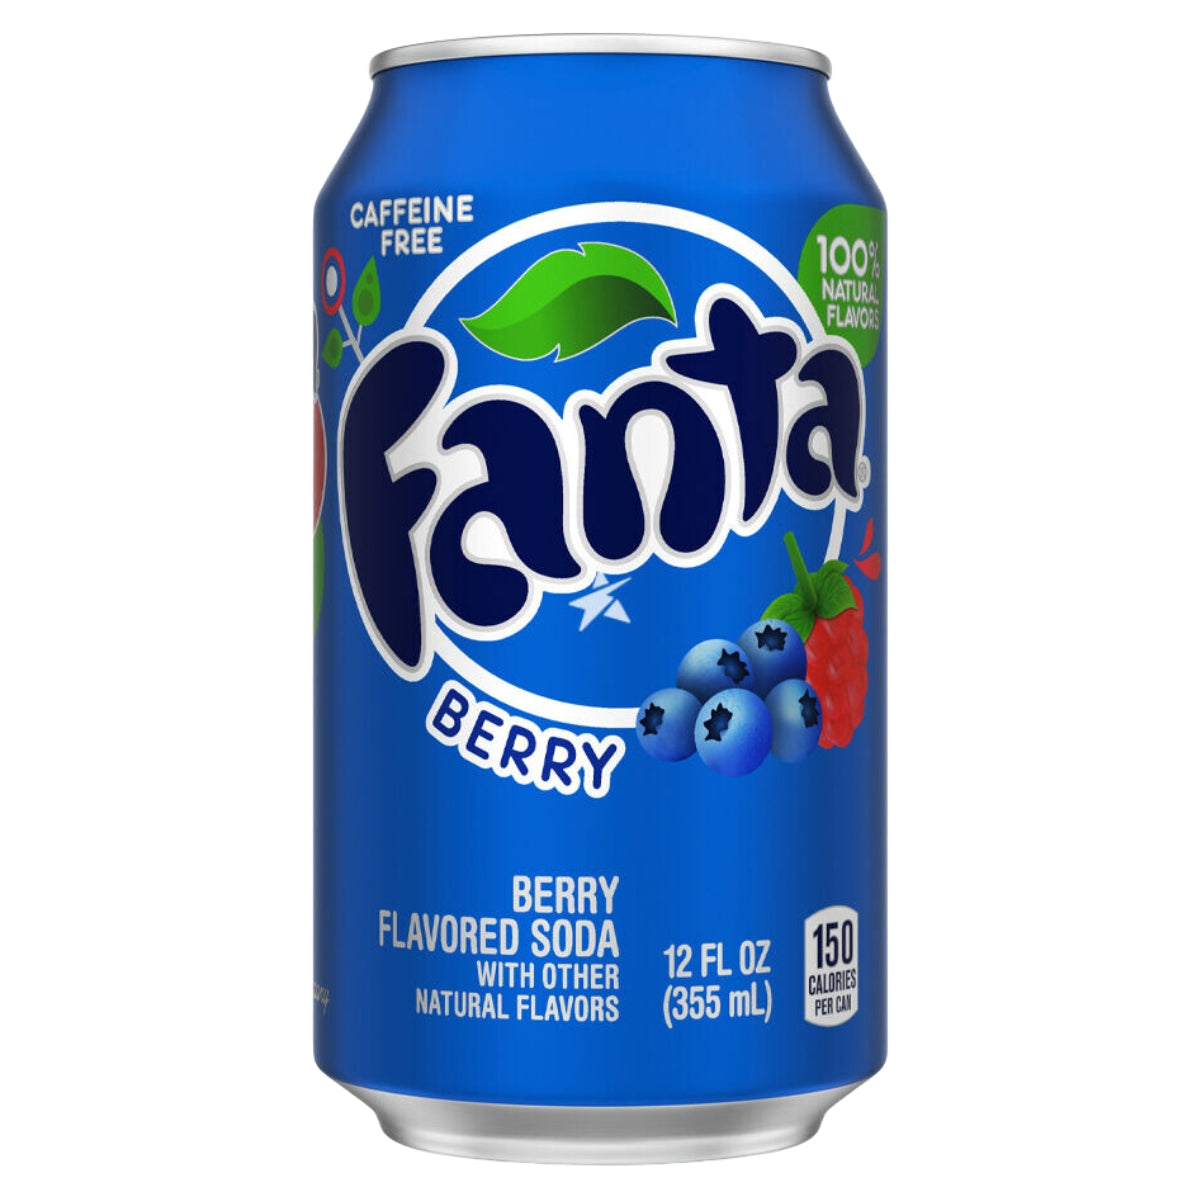 A can of Fanta - Berry - 330ml soda.